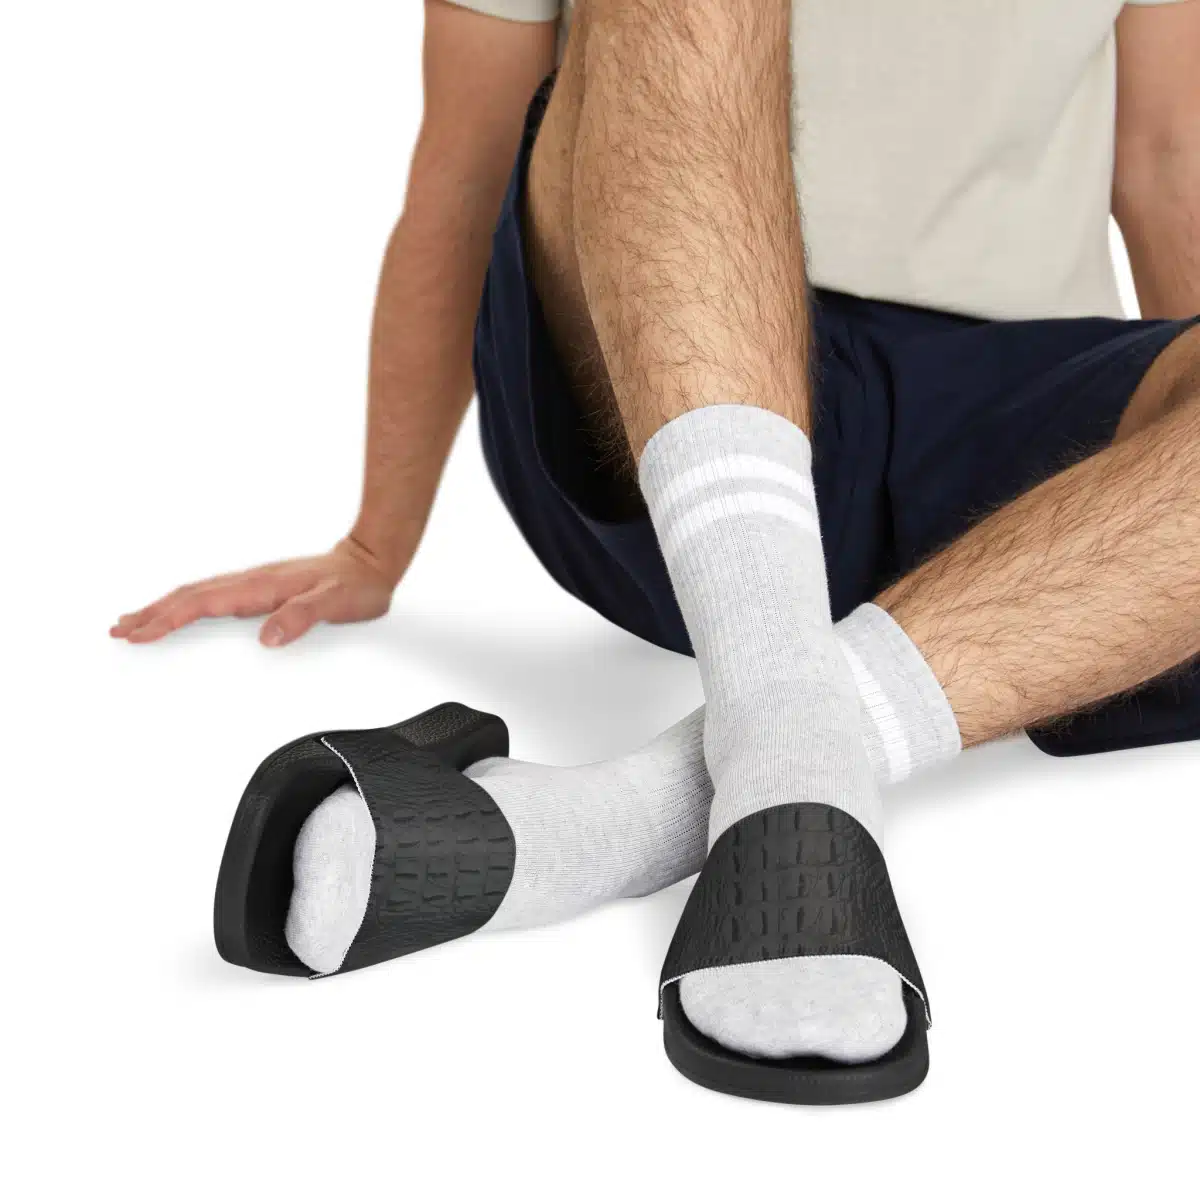 Featured image for “Men's PU Slide Sandals”